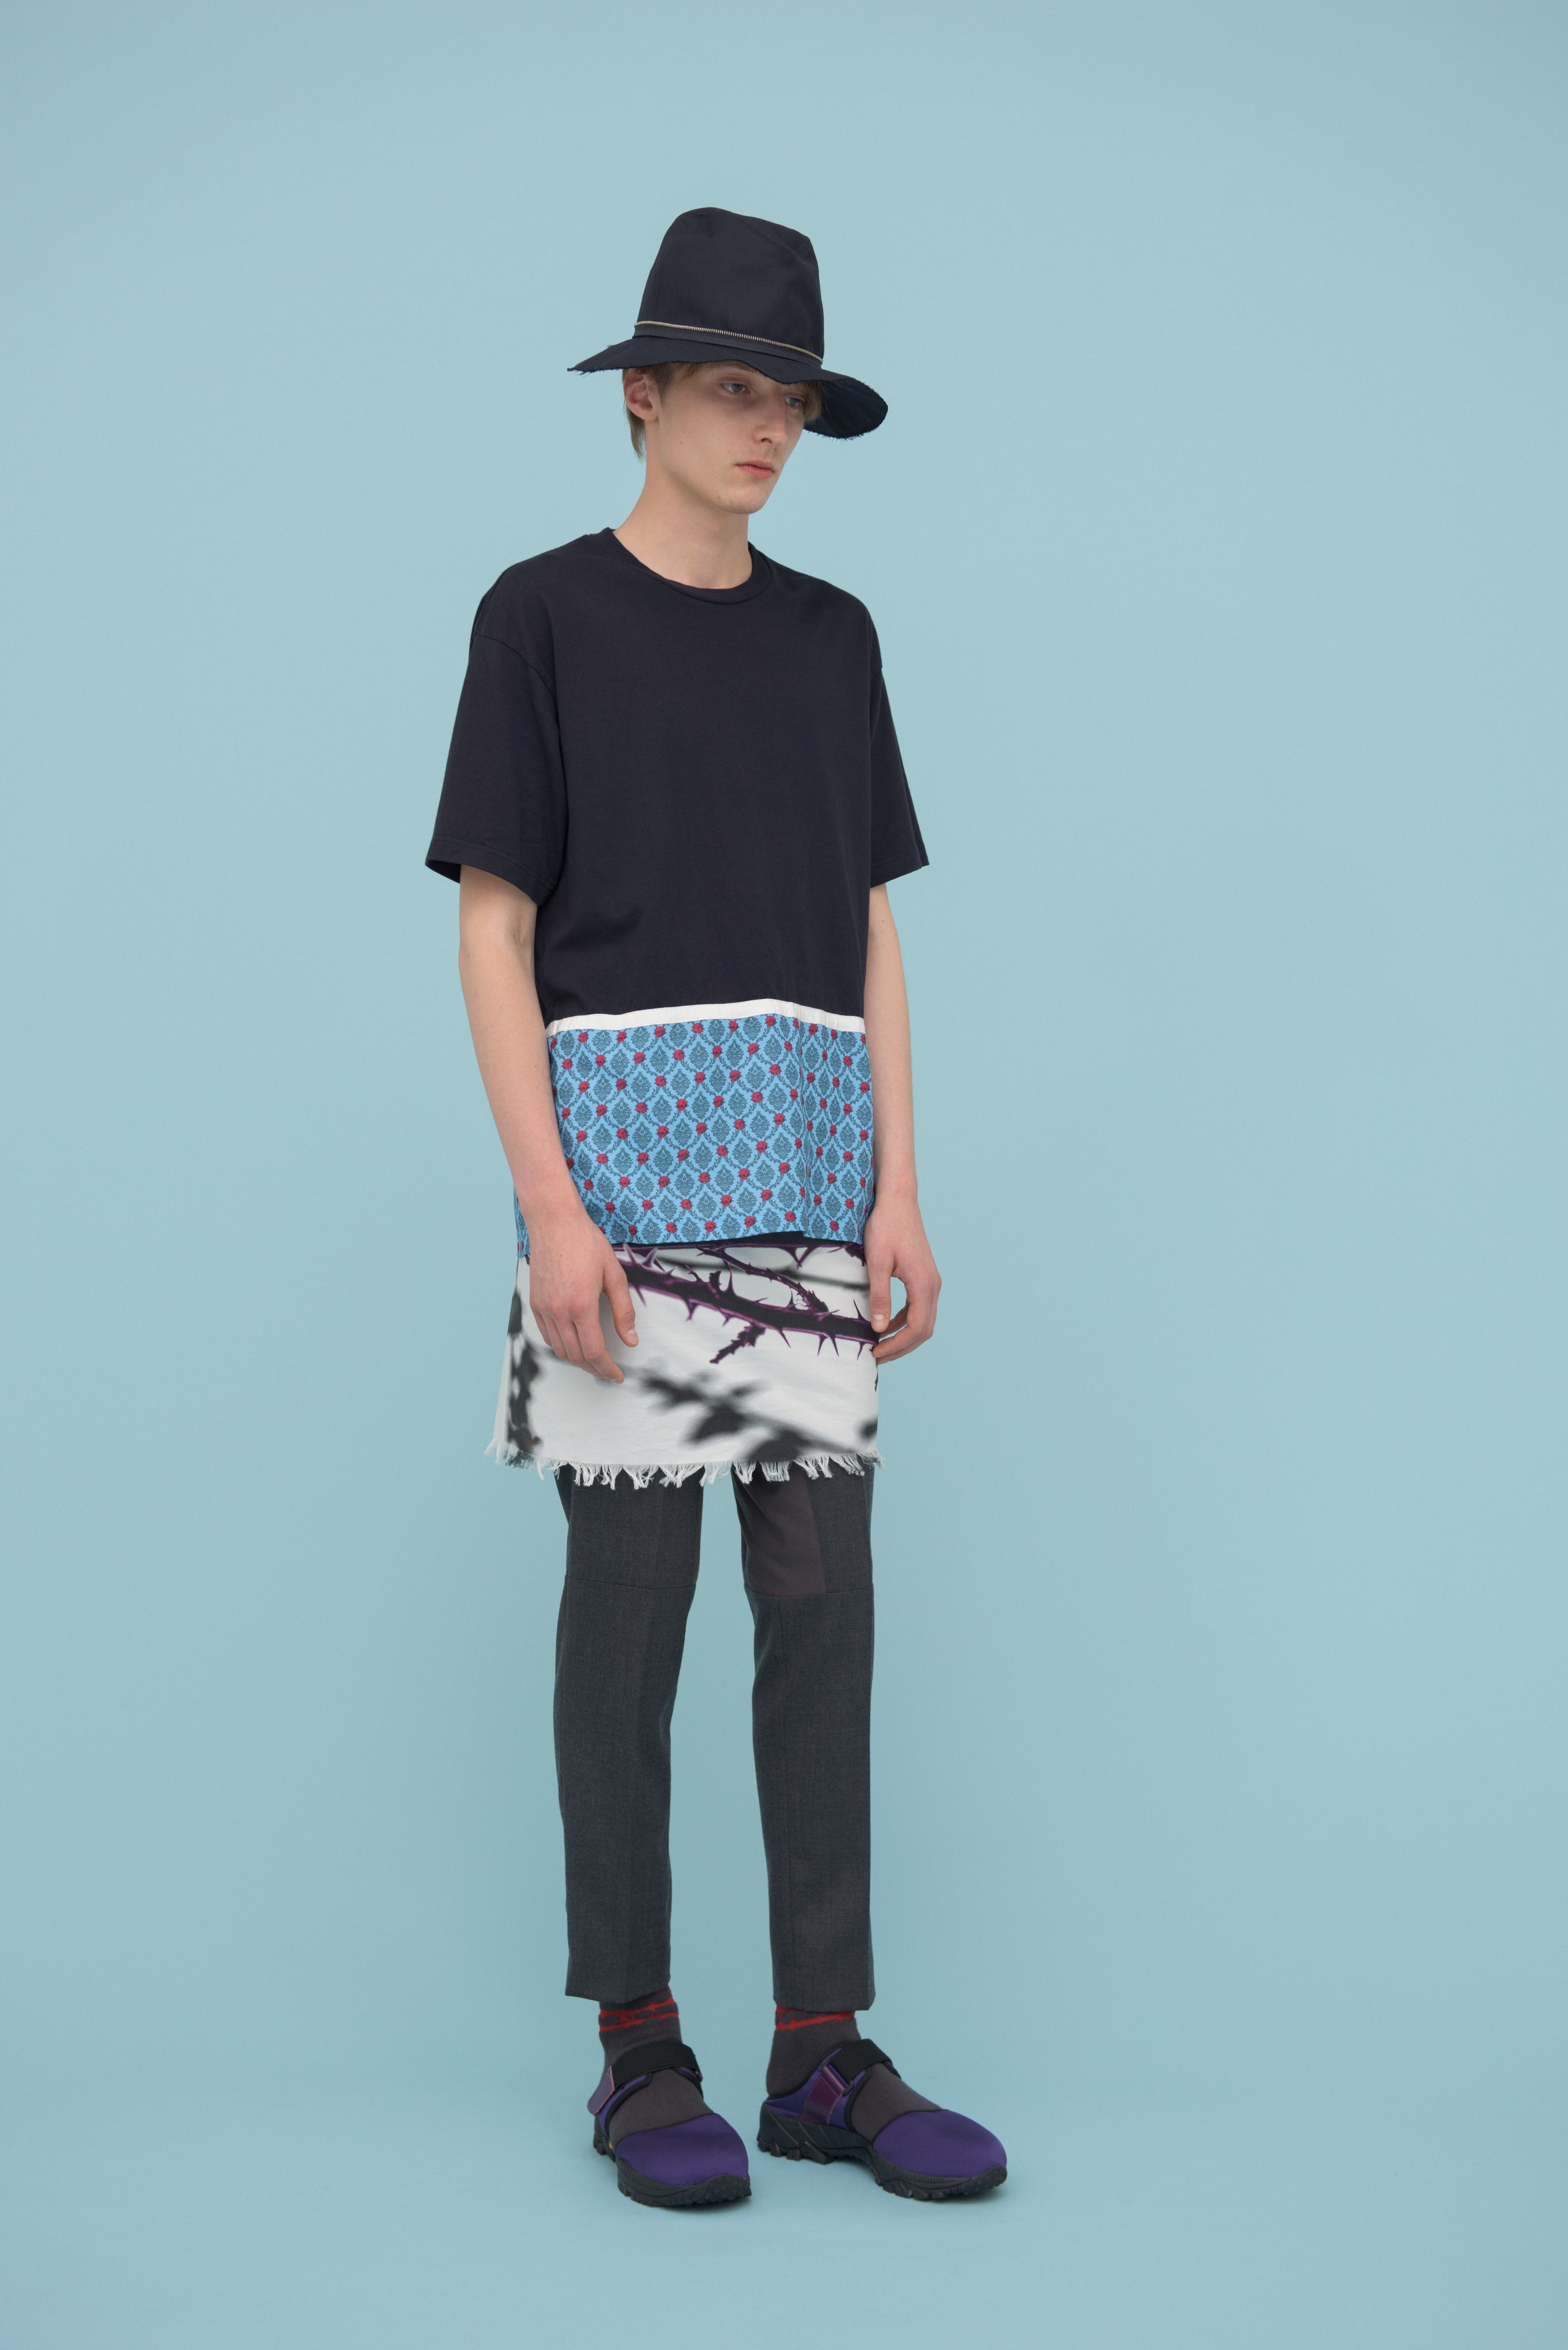 JohnUNDERCOVER Jun Takahashi Japan Fashion Clothing Apparel Streetwear Luxury Bucket Hats T-Shirts Button-Downs Trousers Pants Jackets